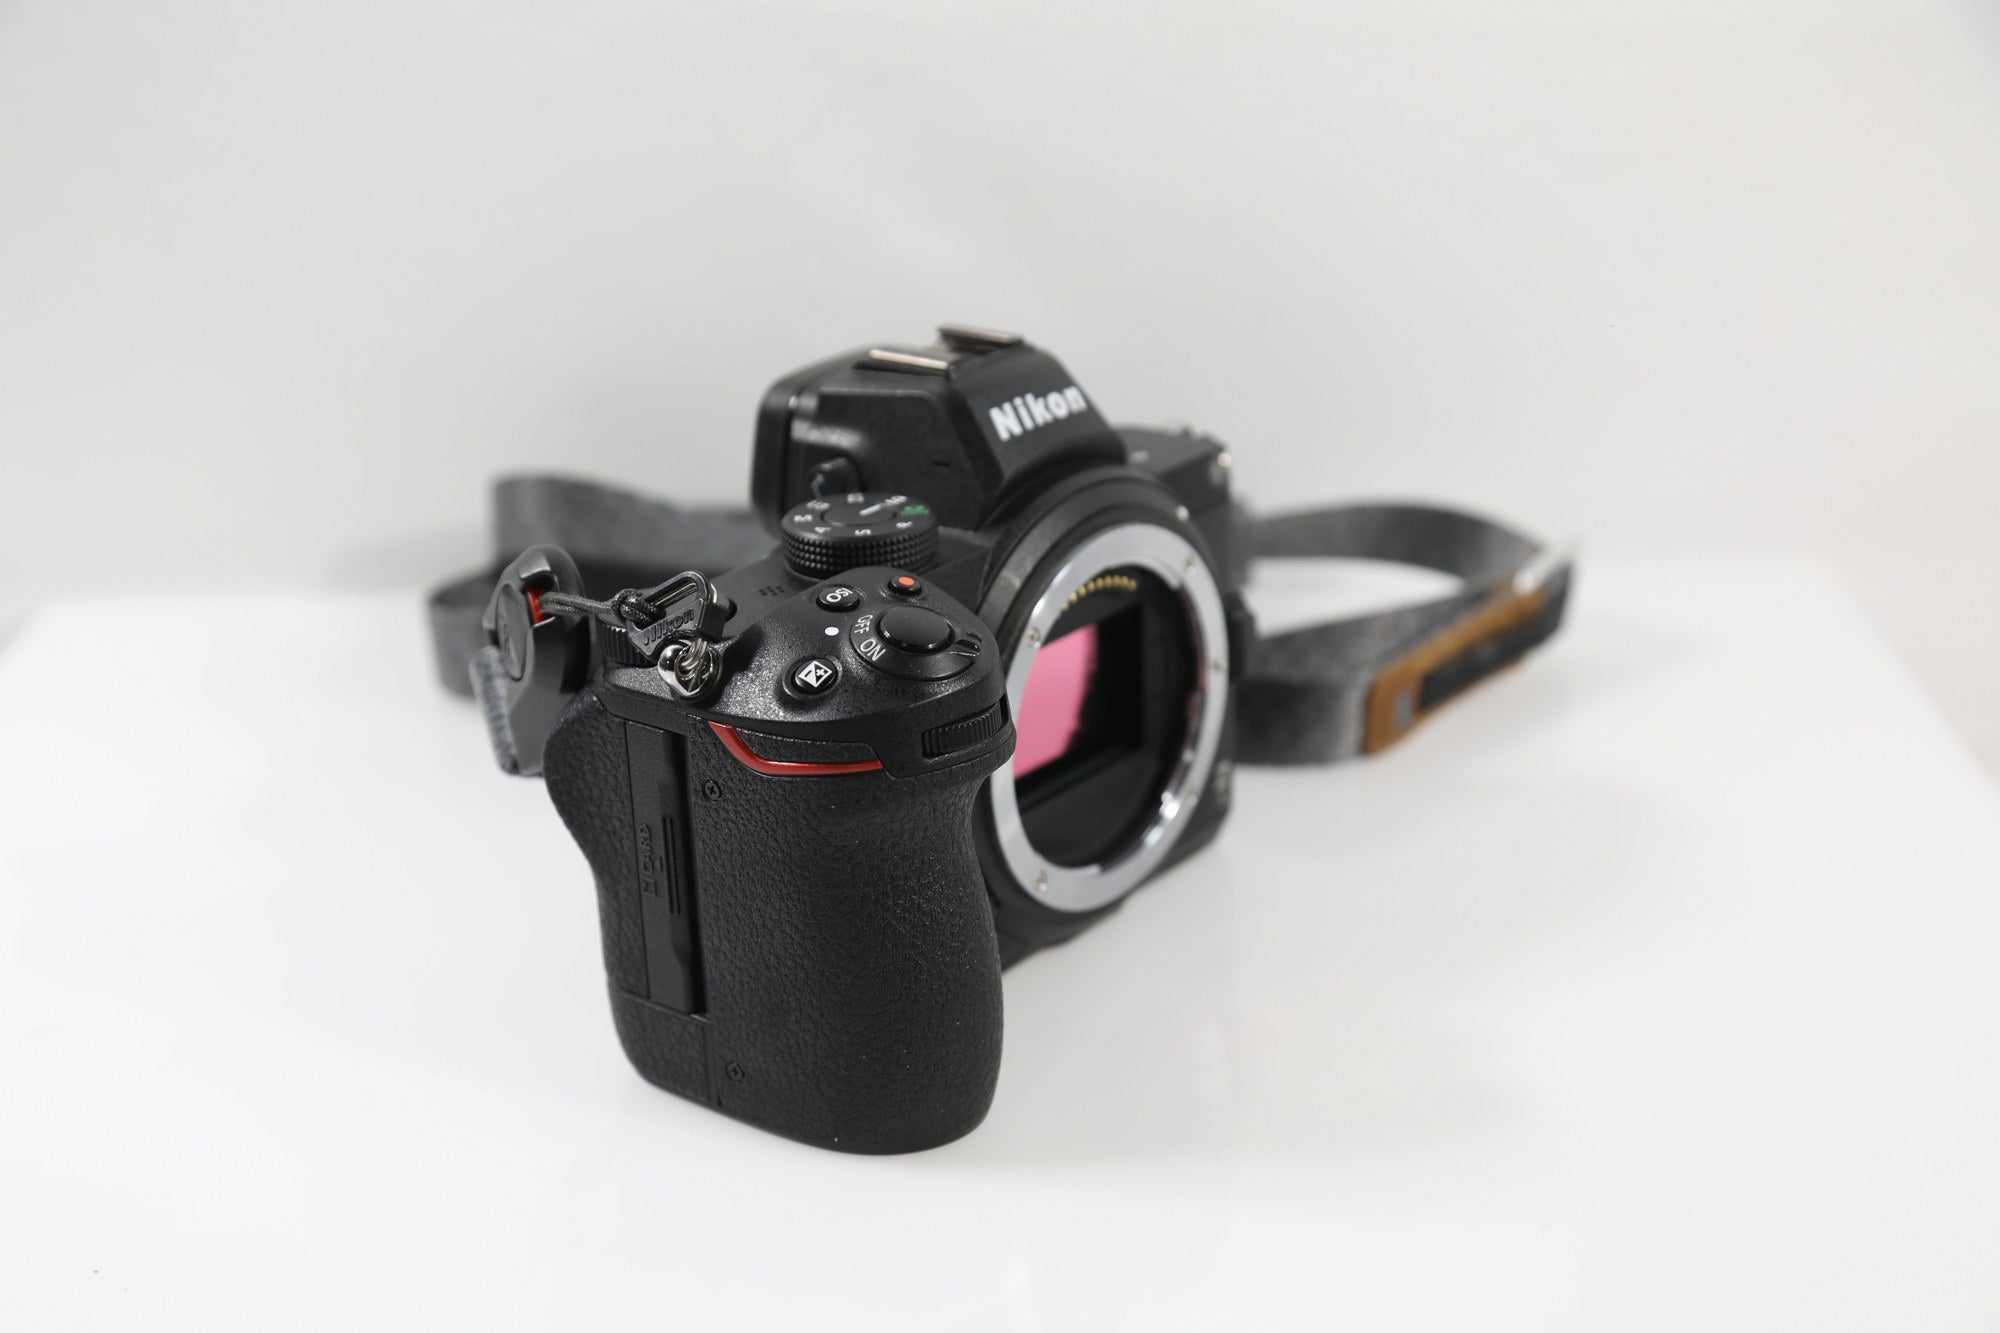 Nikon Z5 sin espejo - Cuerpo